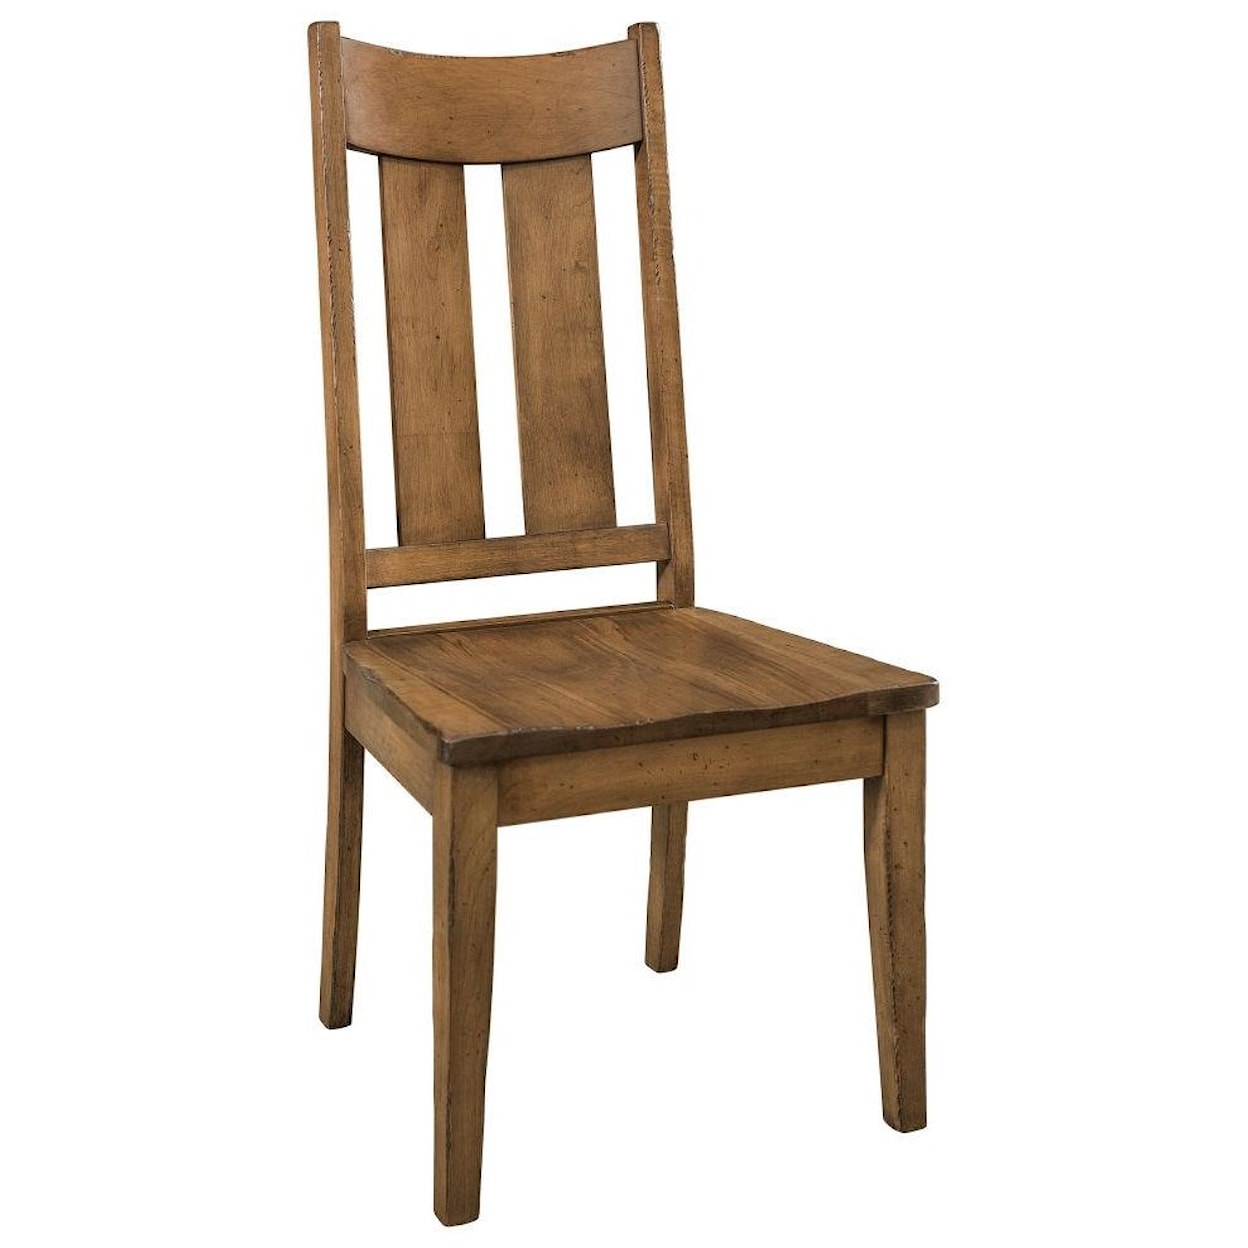 F&N Woodworking Aspen Side Chair